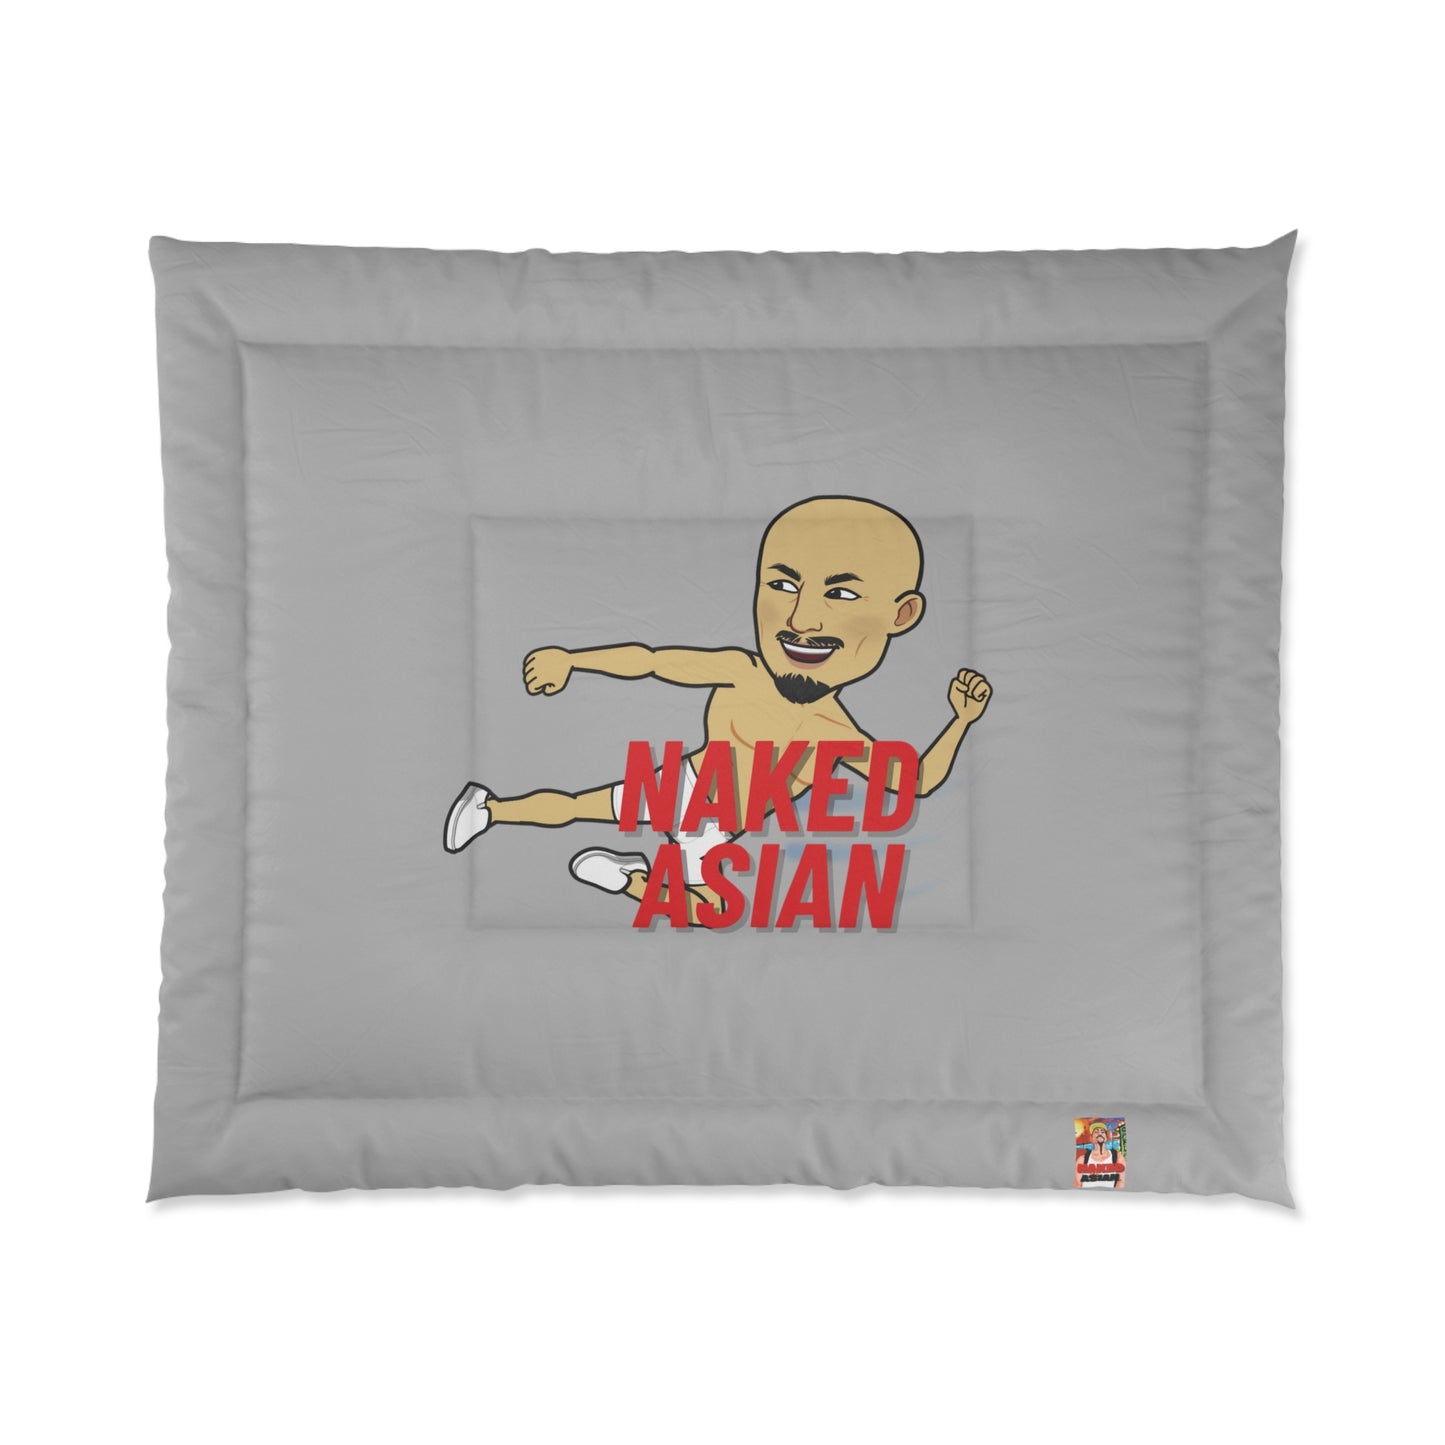 Naked Asian Kick! Comforter